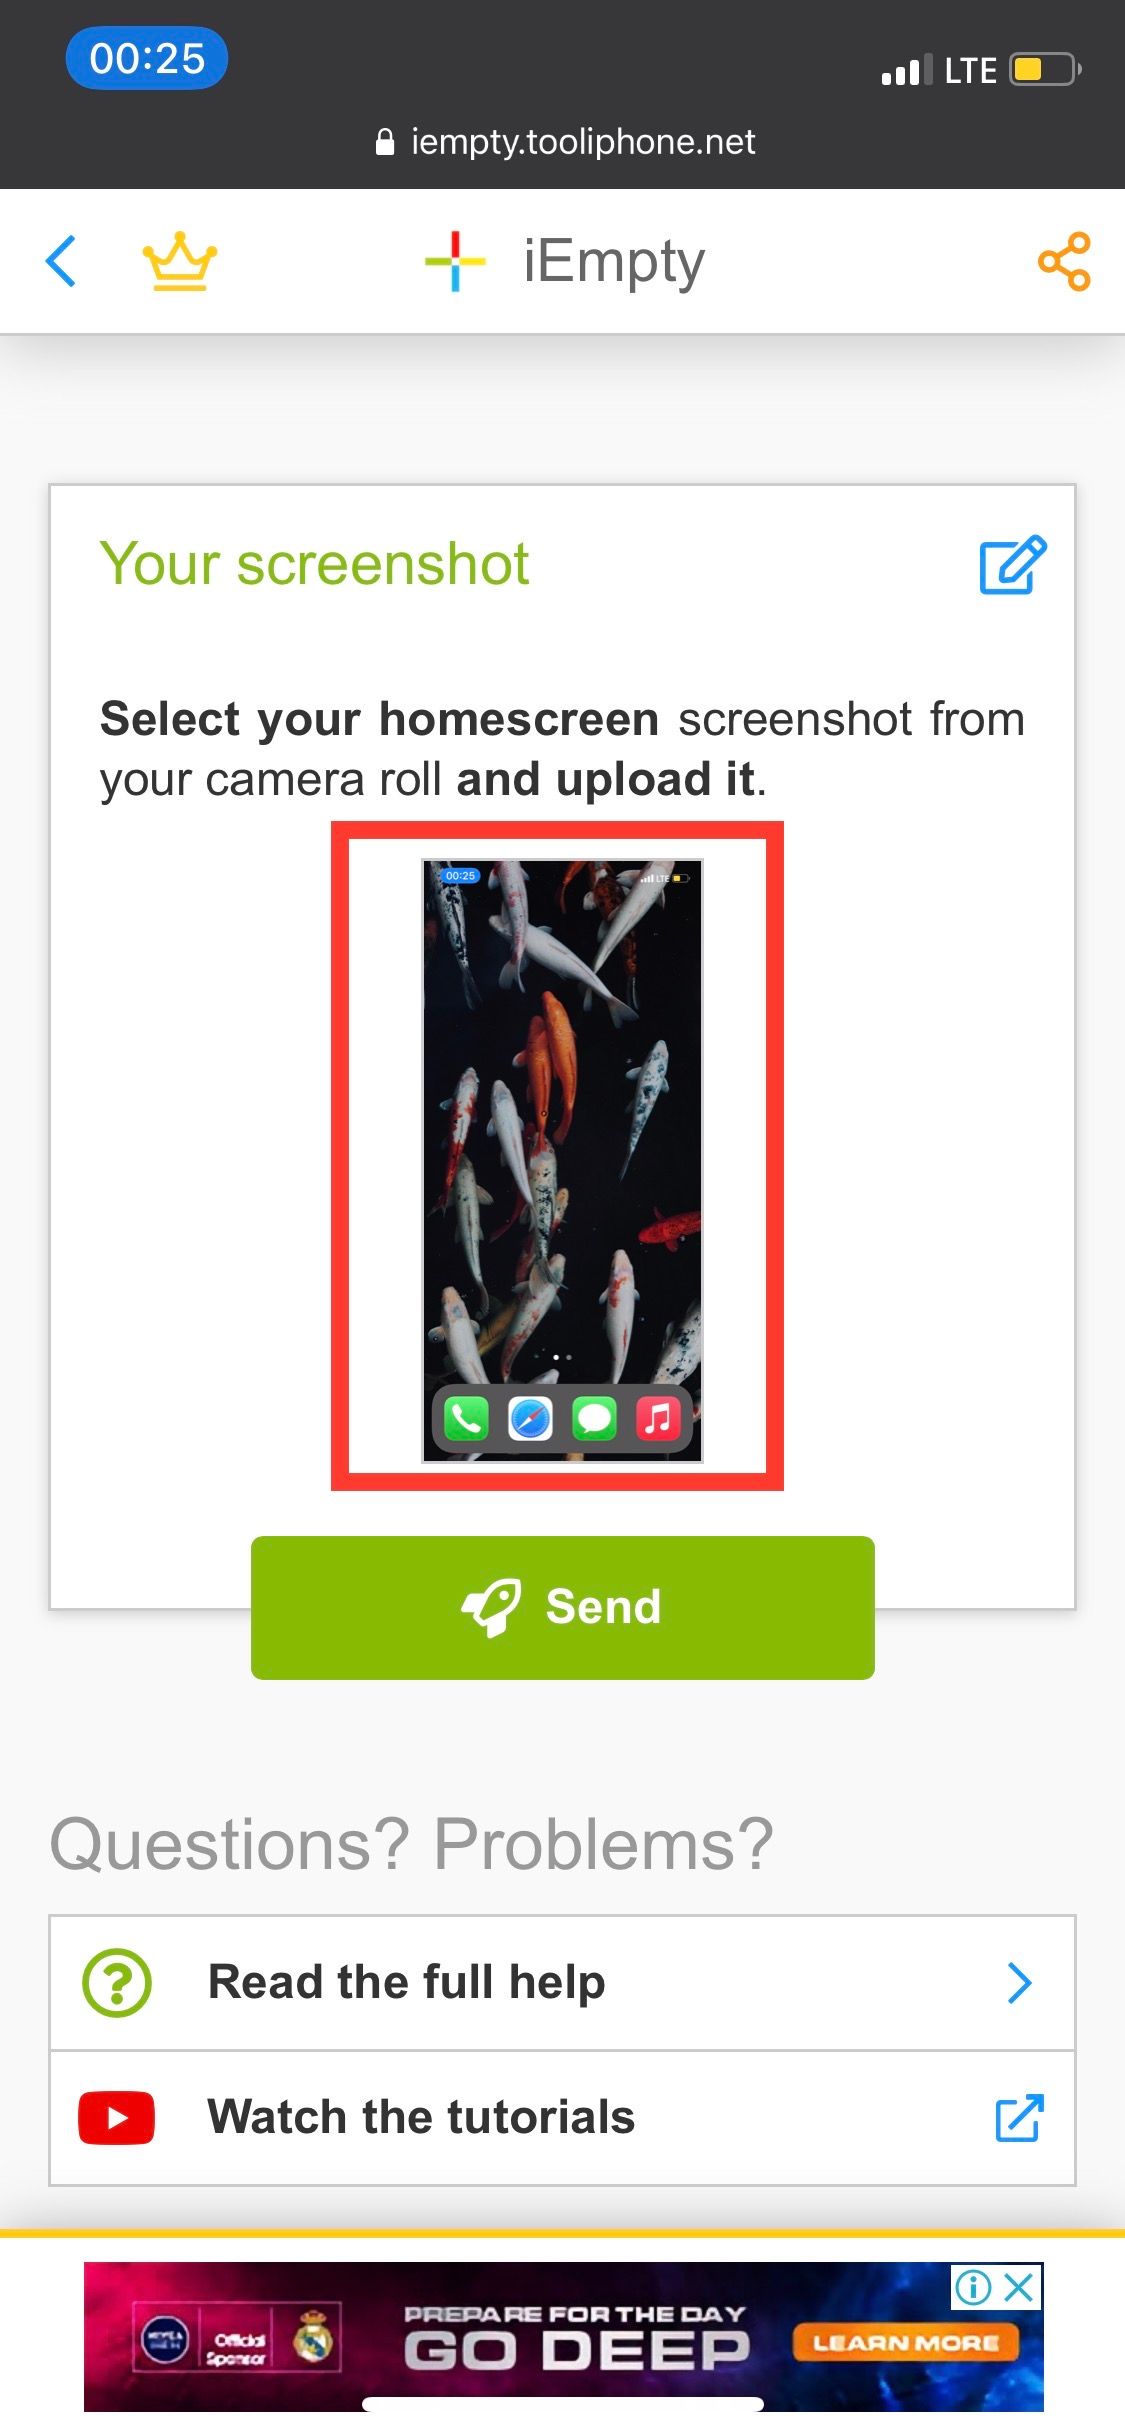 iEmpty dashboard showing preview of iPhone home screen screenshot